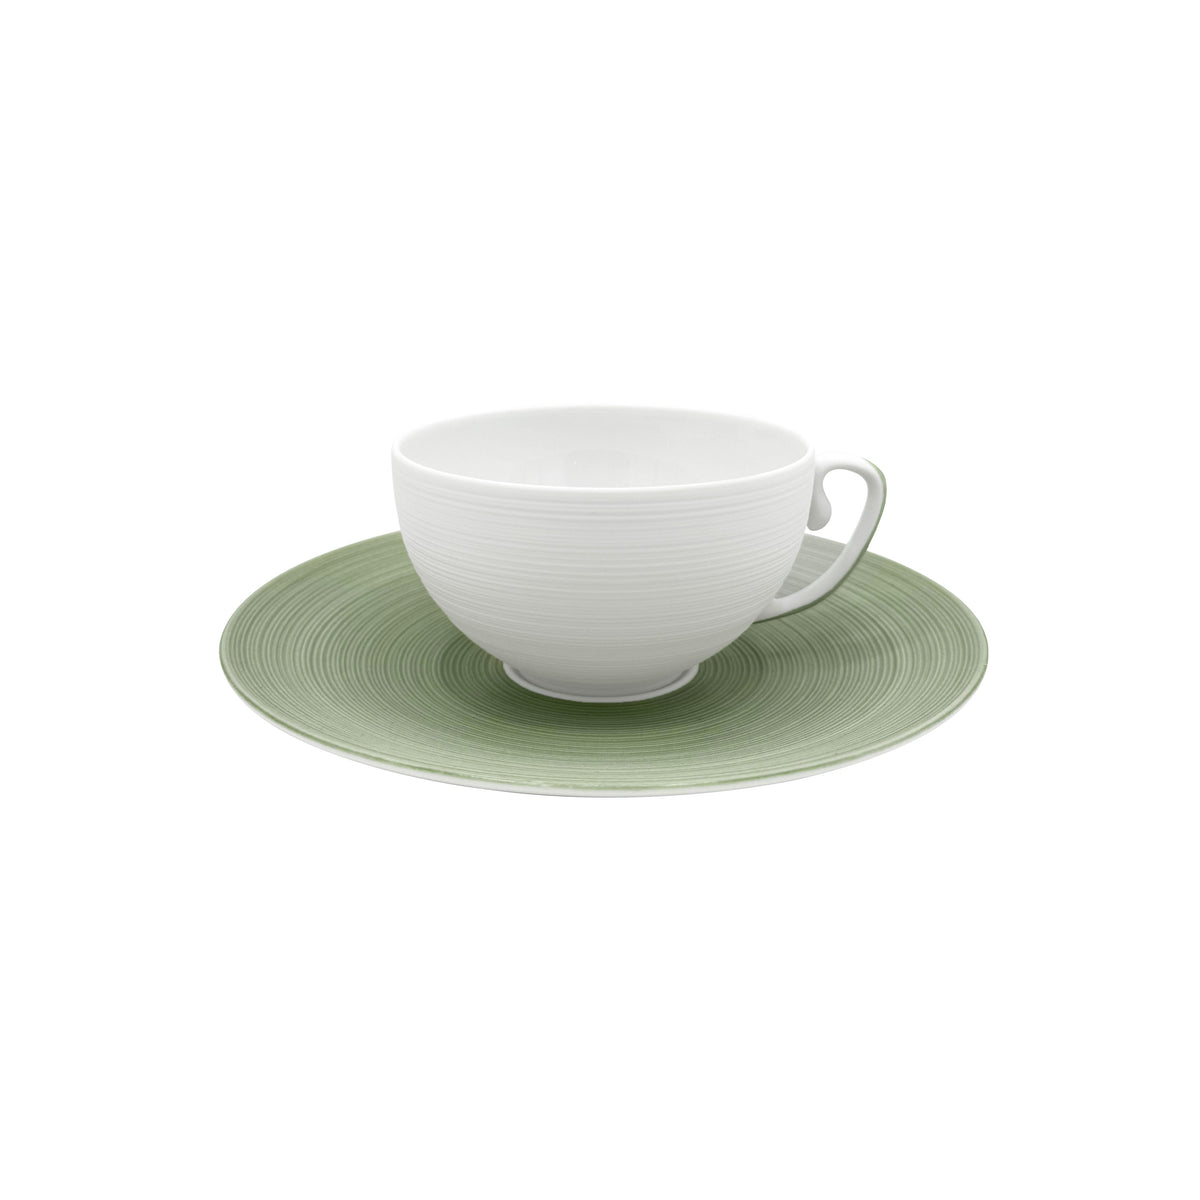 HEMISPHERE Kaki-Green Tea set (cup & saucer)